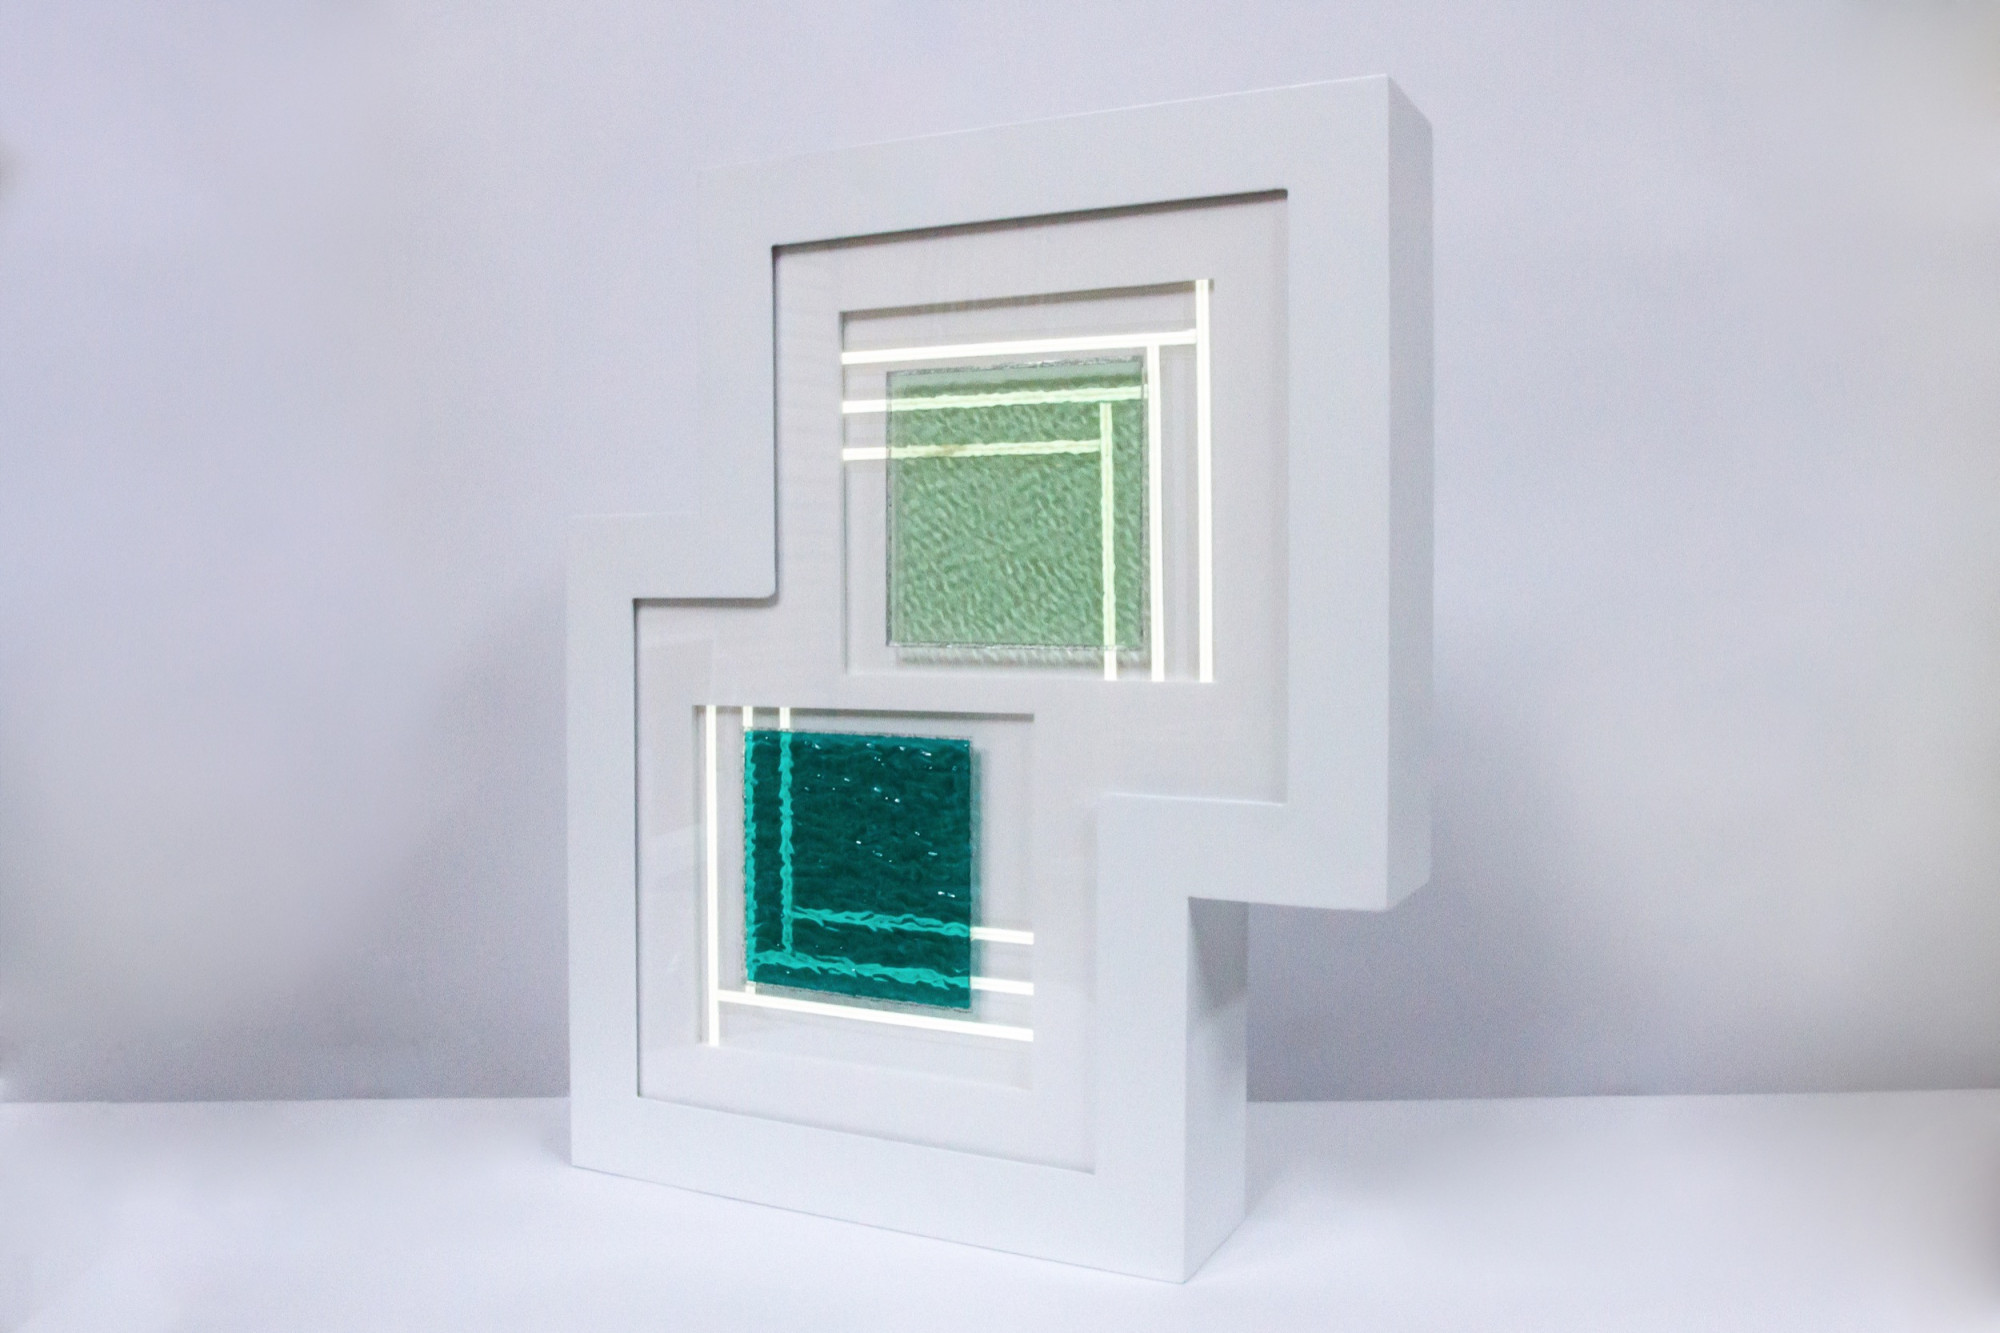 Meagan Streader, Green, parquetry, 2020. Ripple glass, electroluminescent tape, aluminium, enamel, acrylic, foam core, electronic components, 60 x 50 x 10 cm.